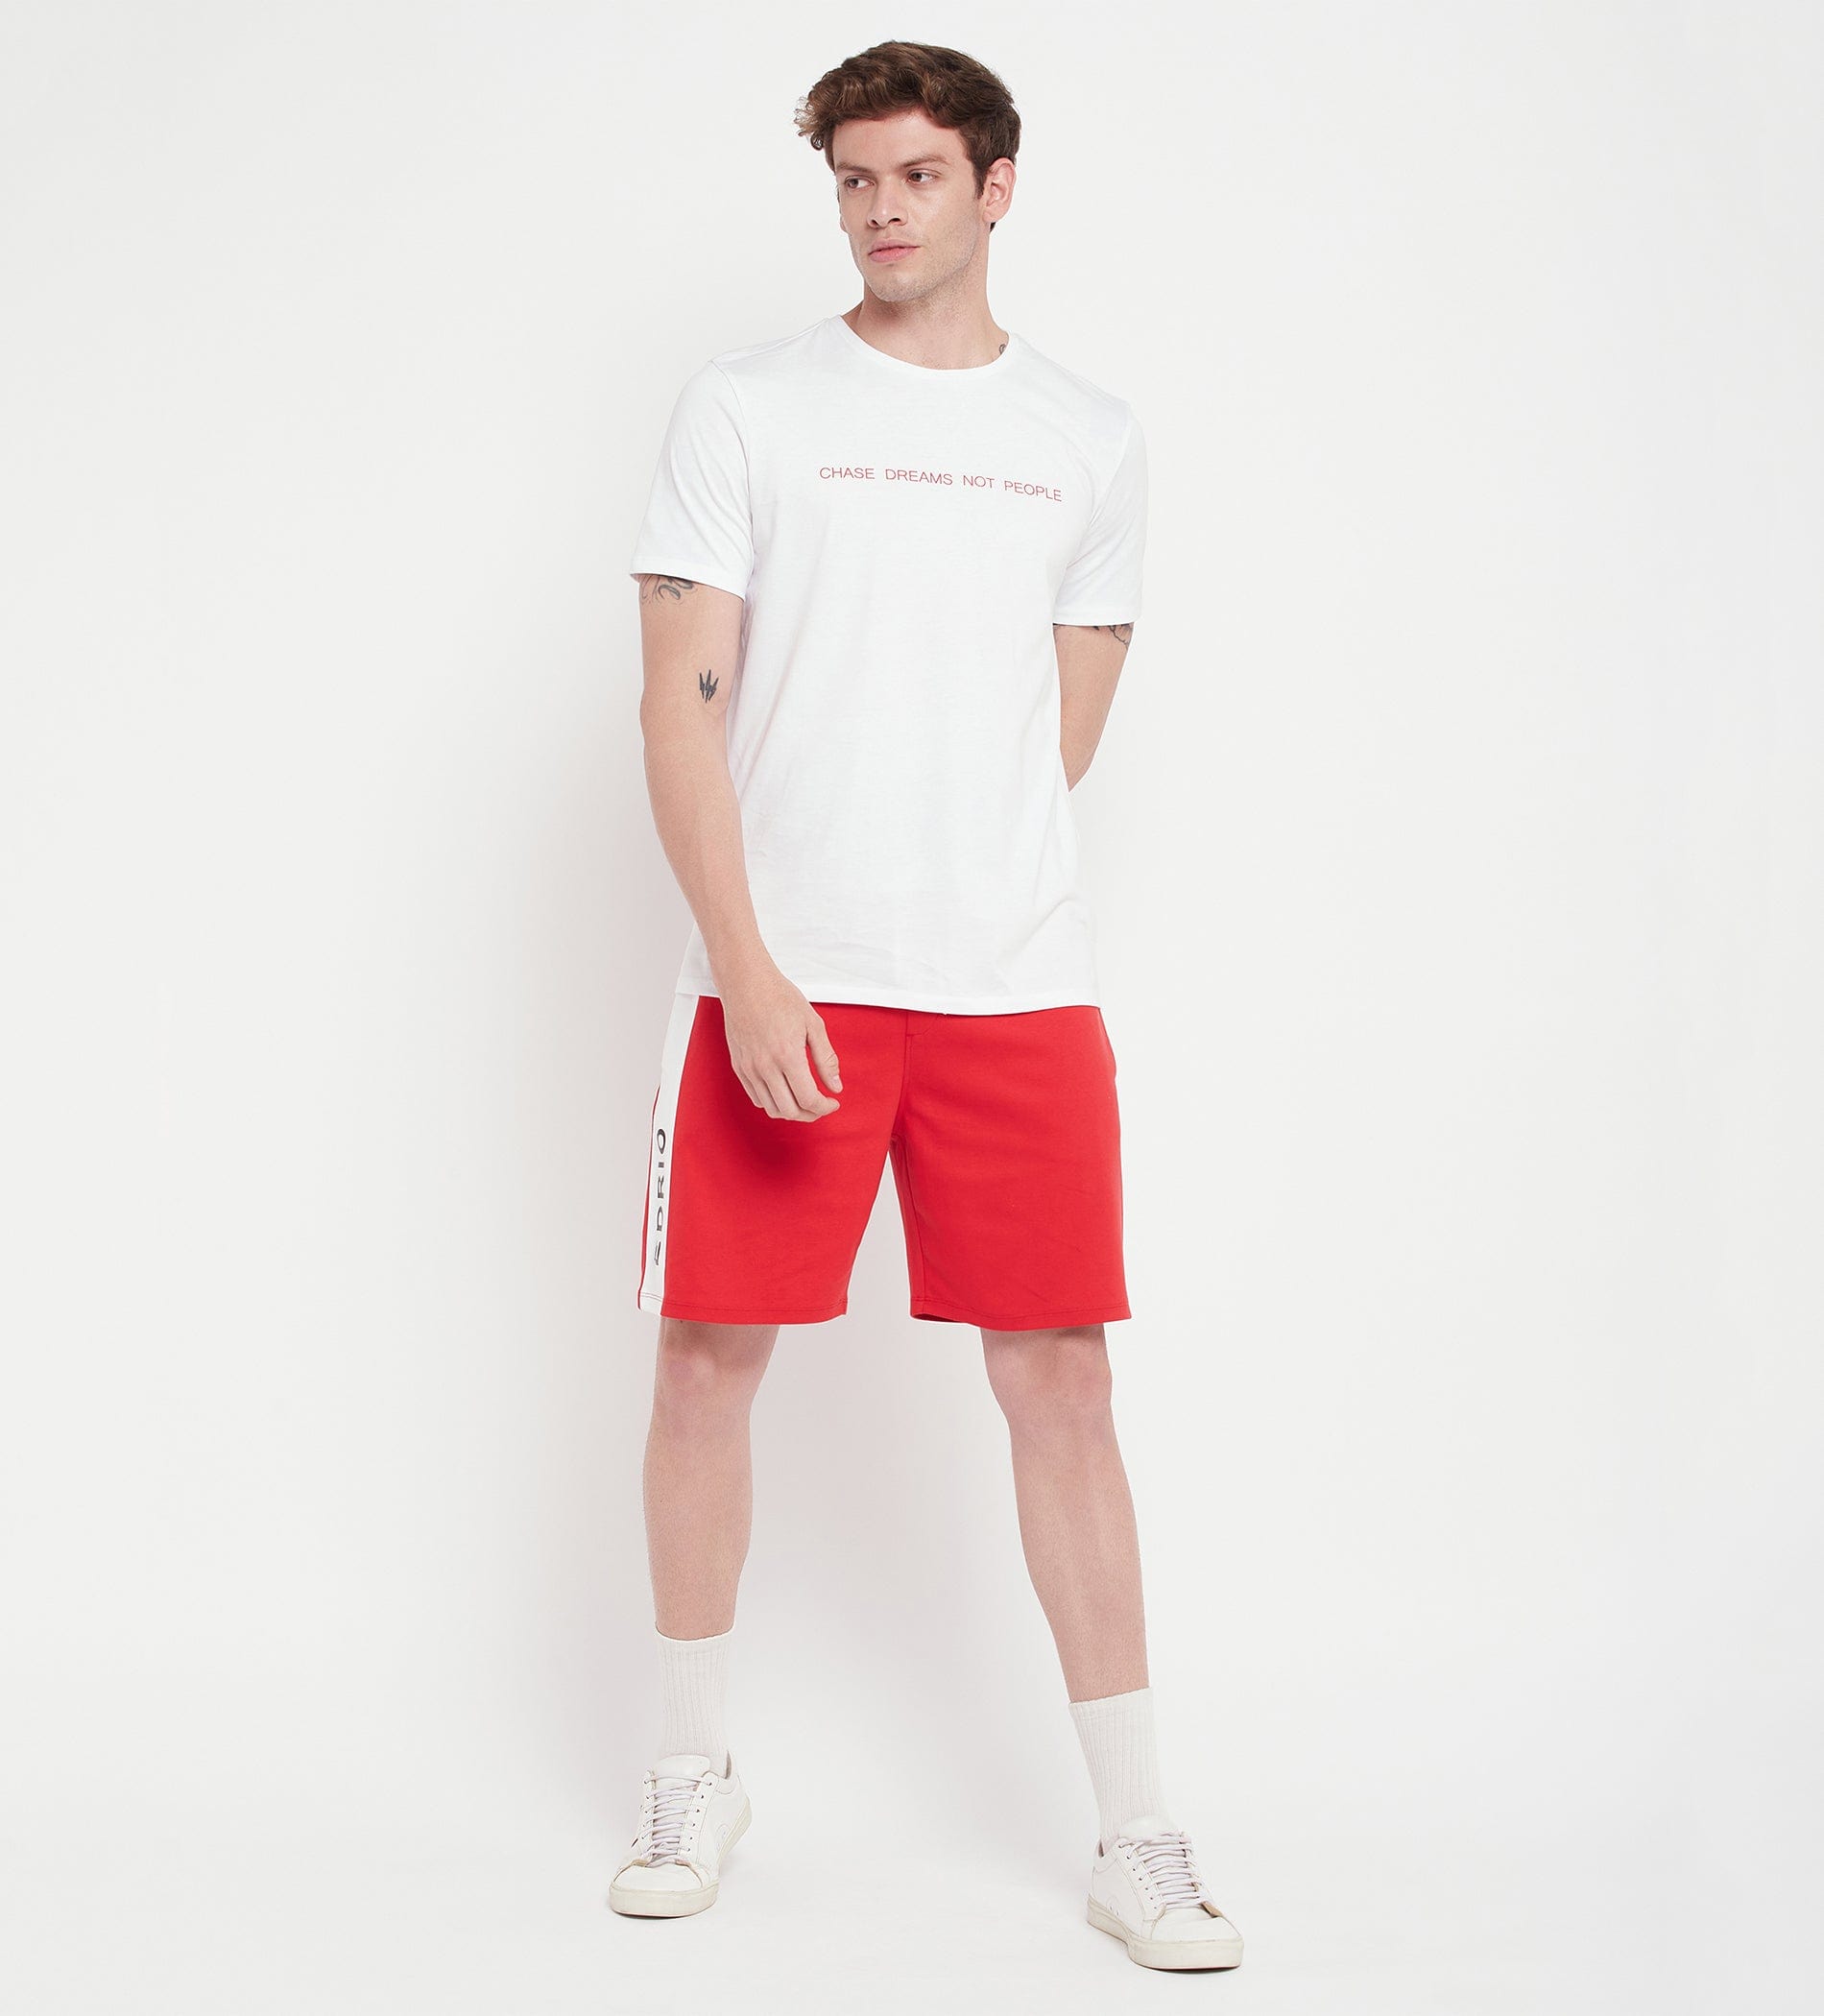 Shorts Shorts Red Printed Regular Fit Shorts for Men